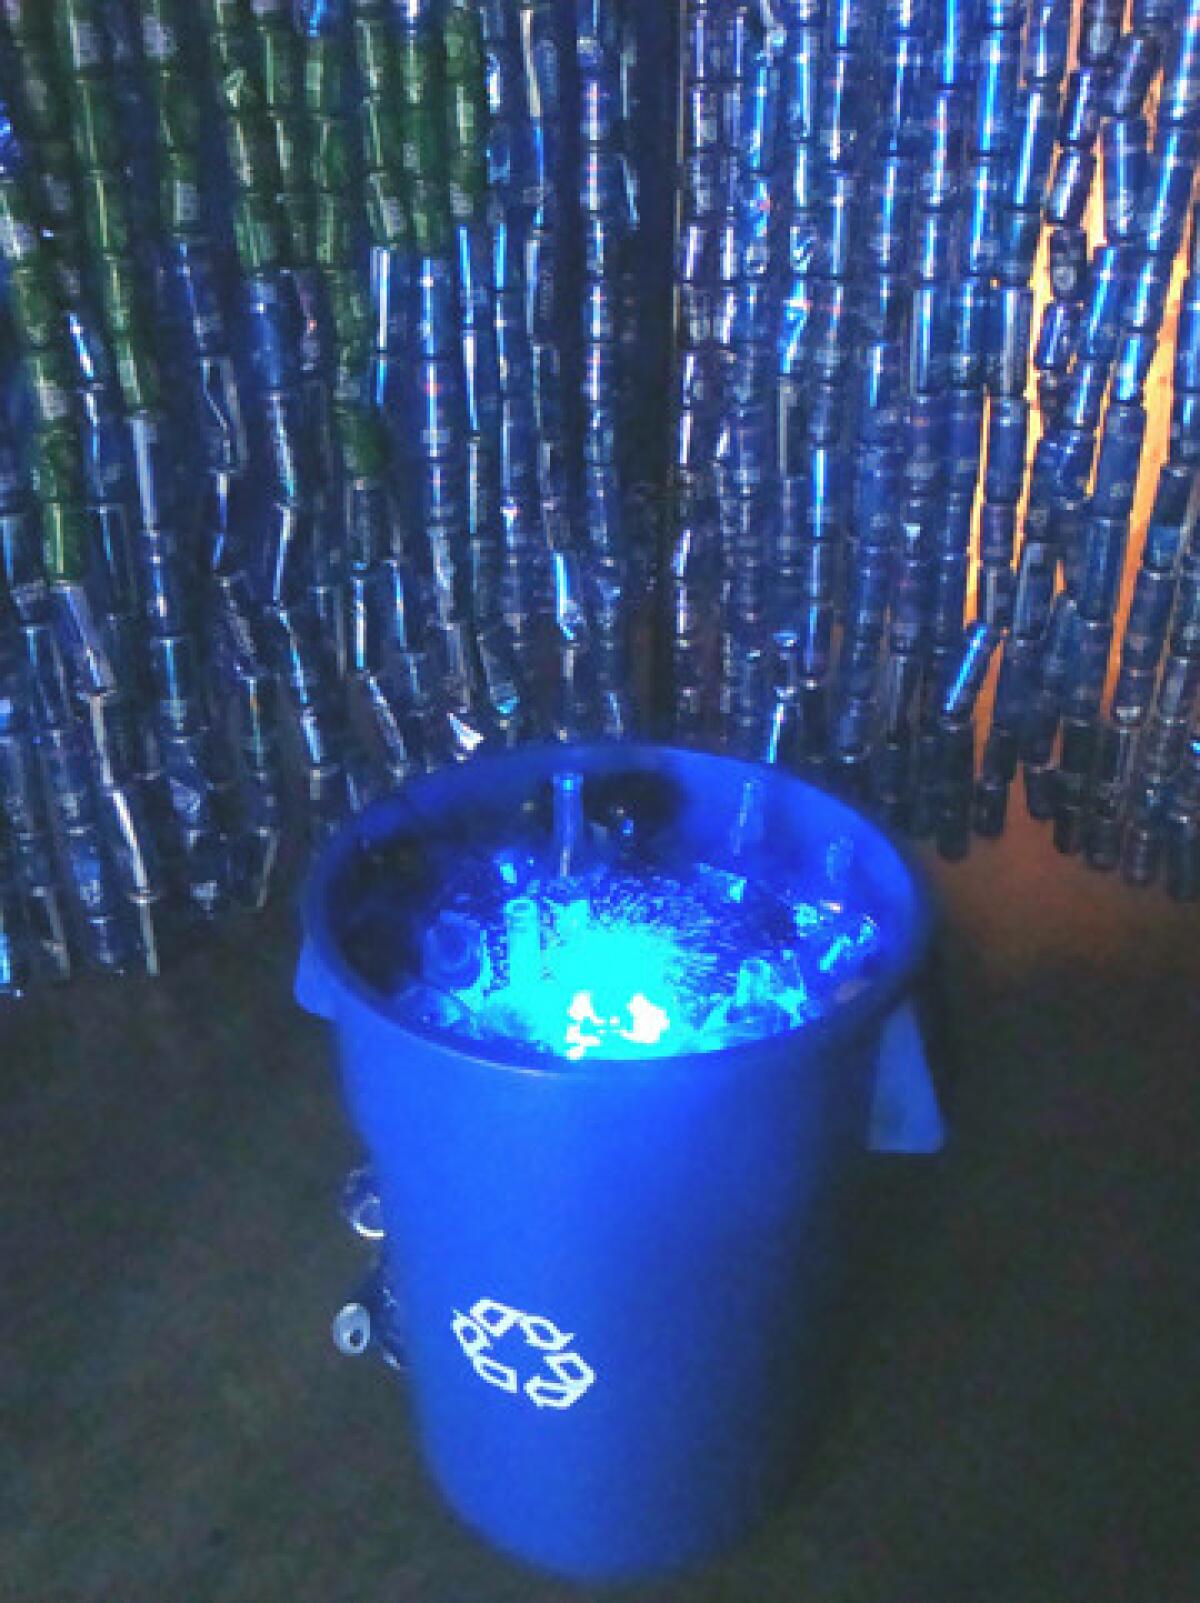 Richard Newton's mixed-media installation, "La Gruta Azul" (2013), is at Jancar Gallery.